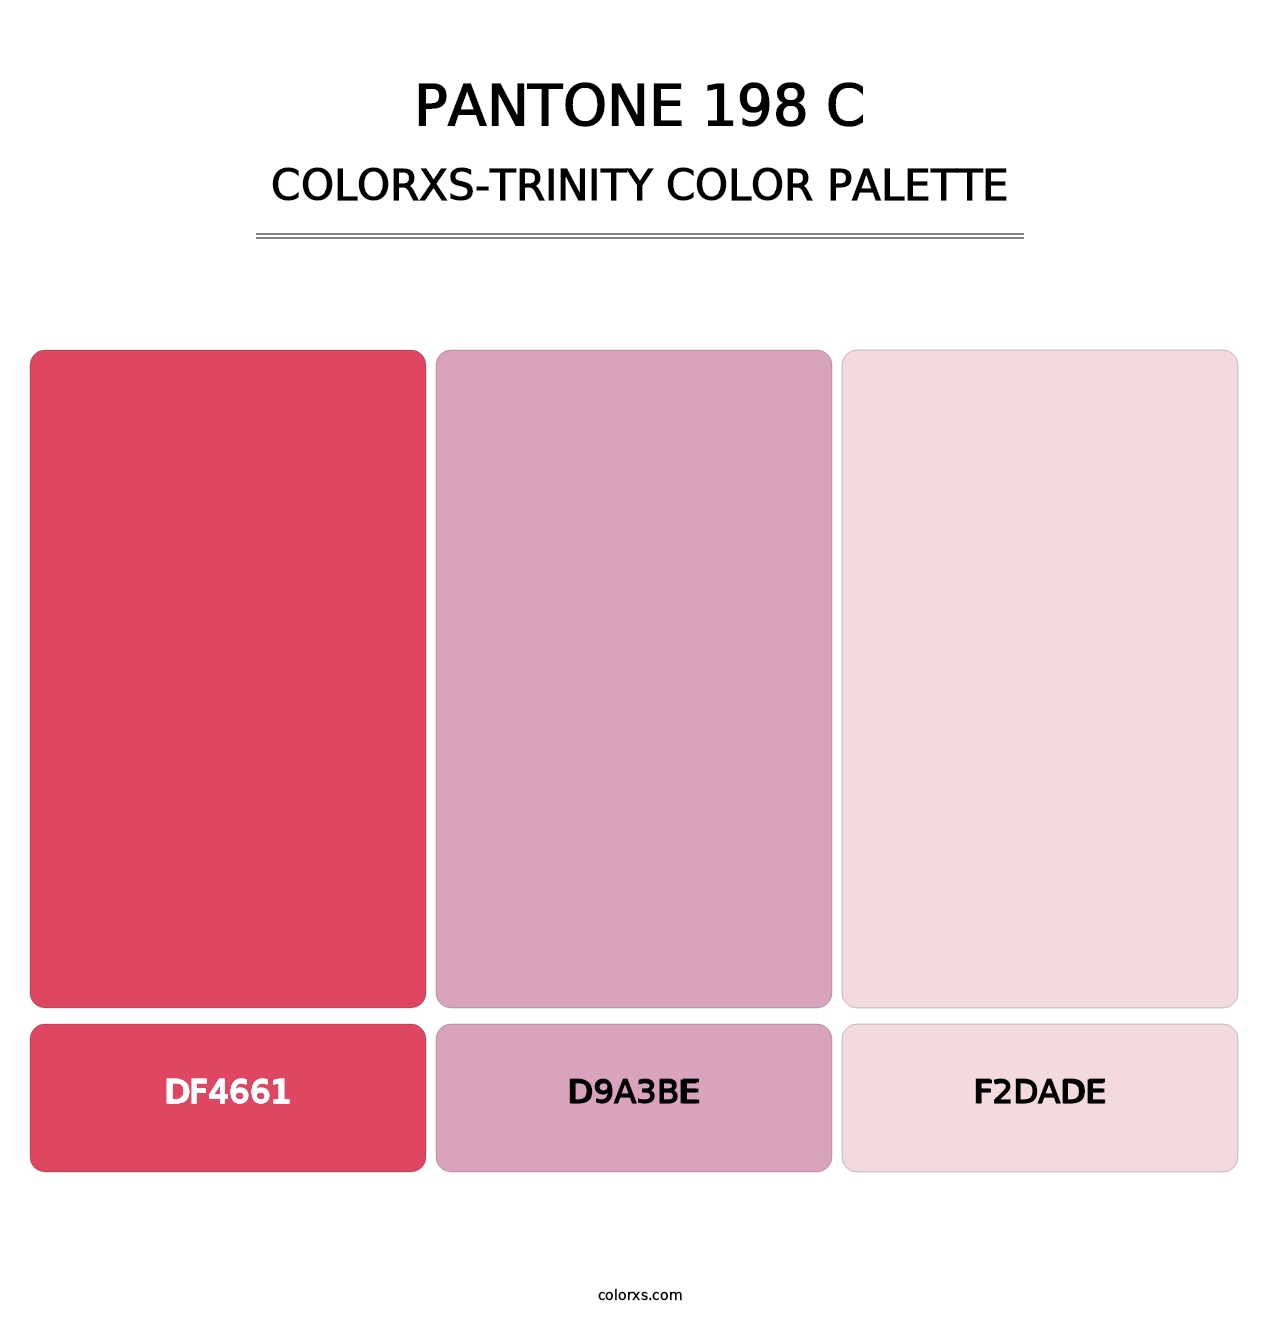 PANTONE 198 C - Colorxs Trinity Palette